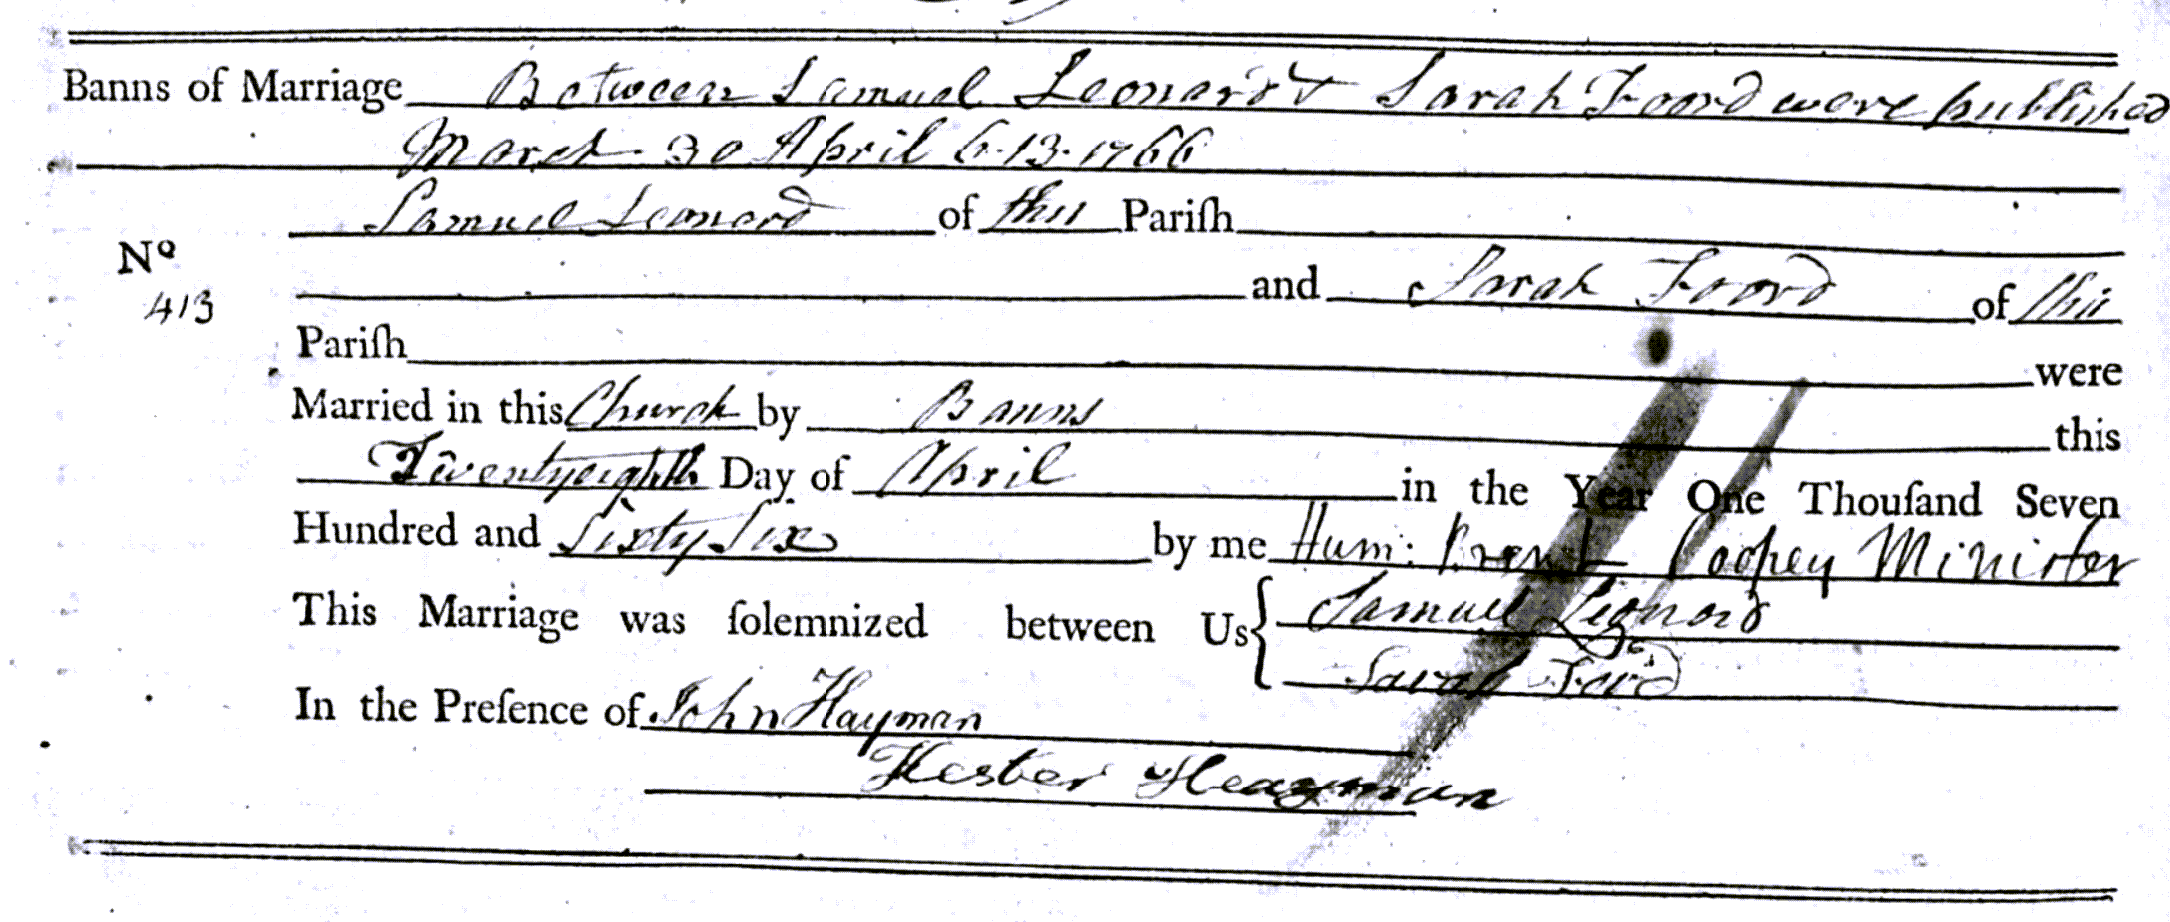 Figure 1: Marriage Register Entry for Samuel Leonard and Sarah Foord